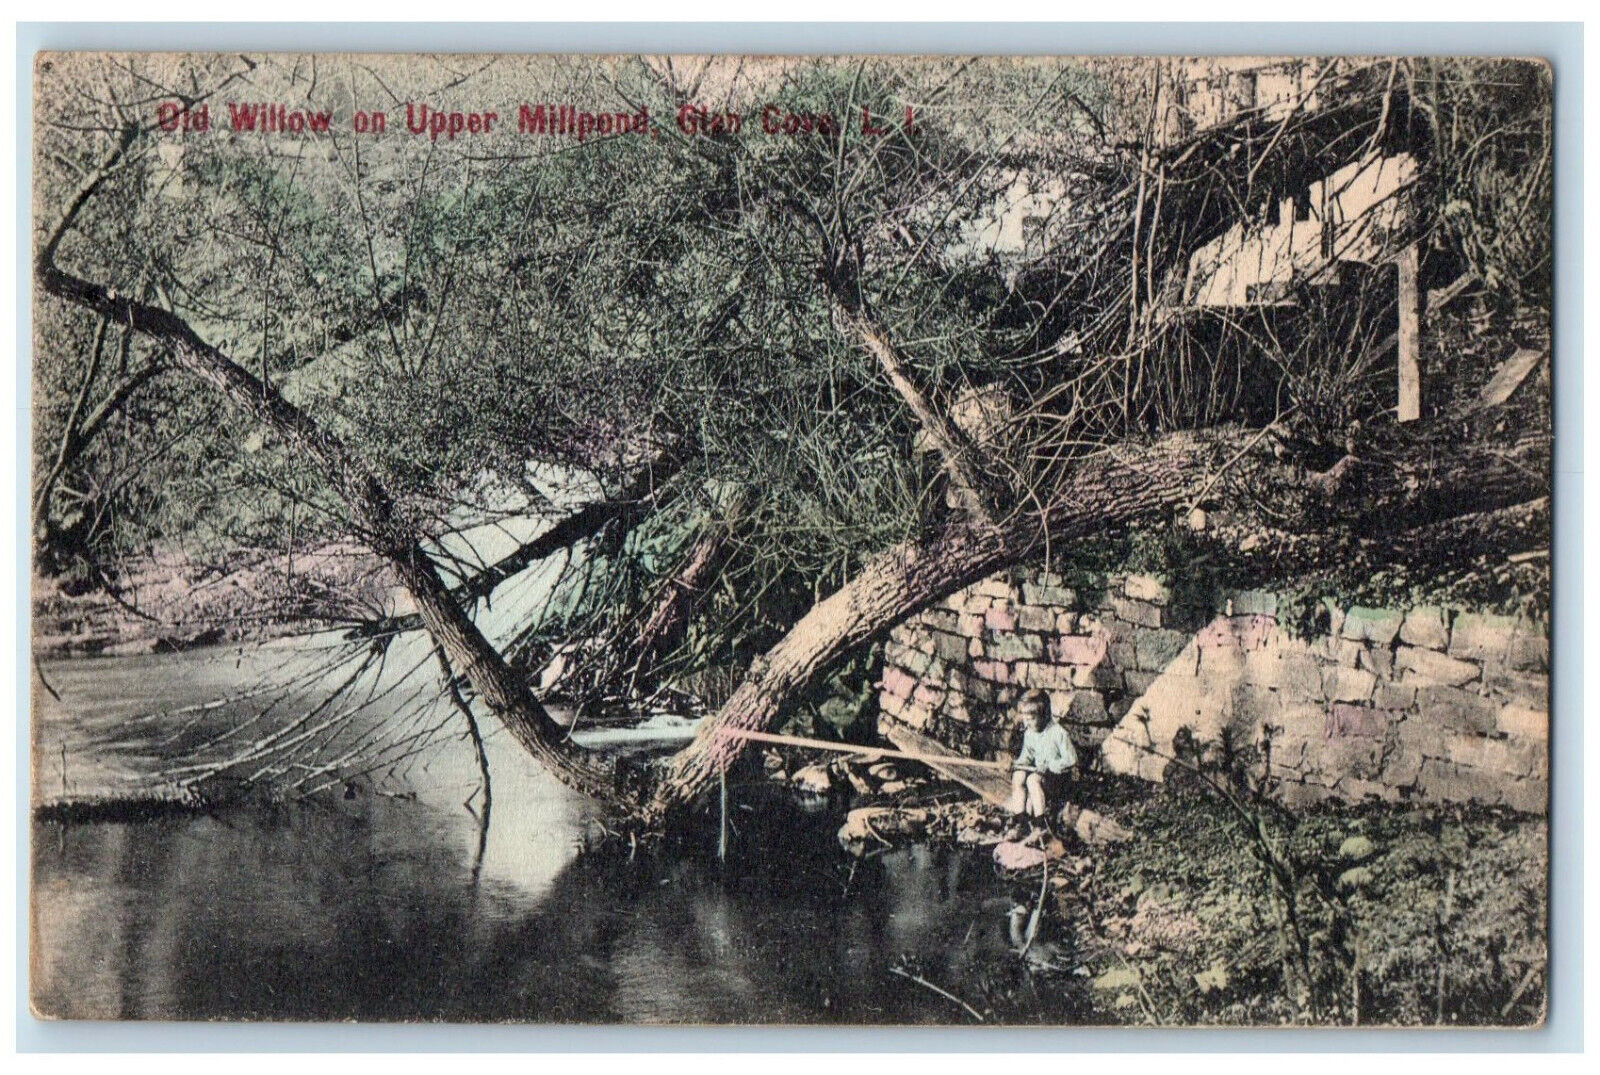 1909 Willow on Upper Millpond Glen Cove Long Island New York NY Postcard